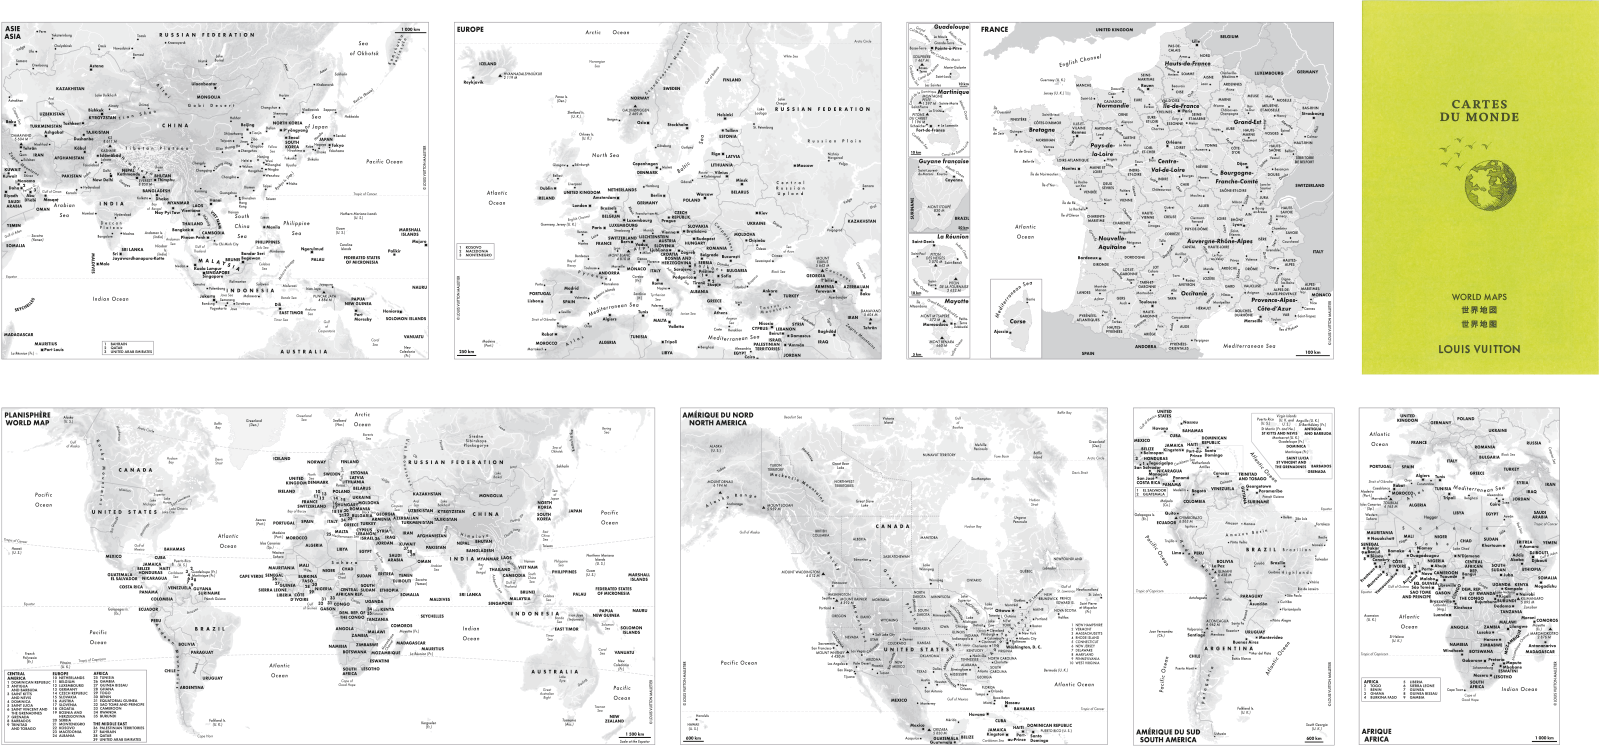 Atlas pour agenda - Louis Vuitton - EdiCarto - agence de cartographie spécialisée - Communication - agenda et calendrier